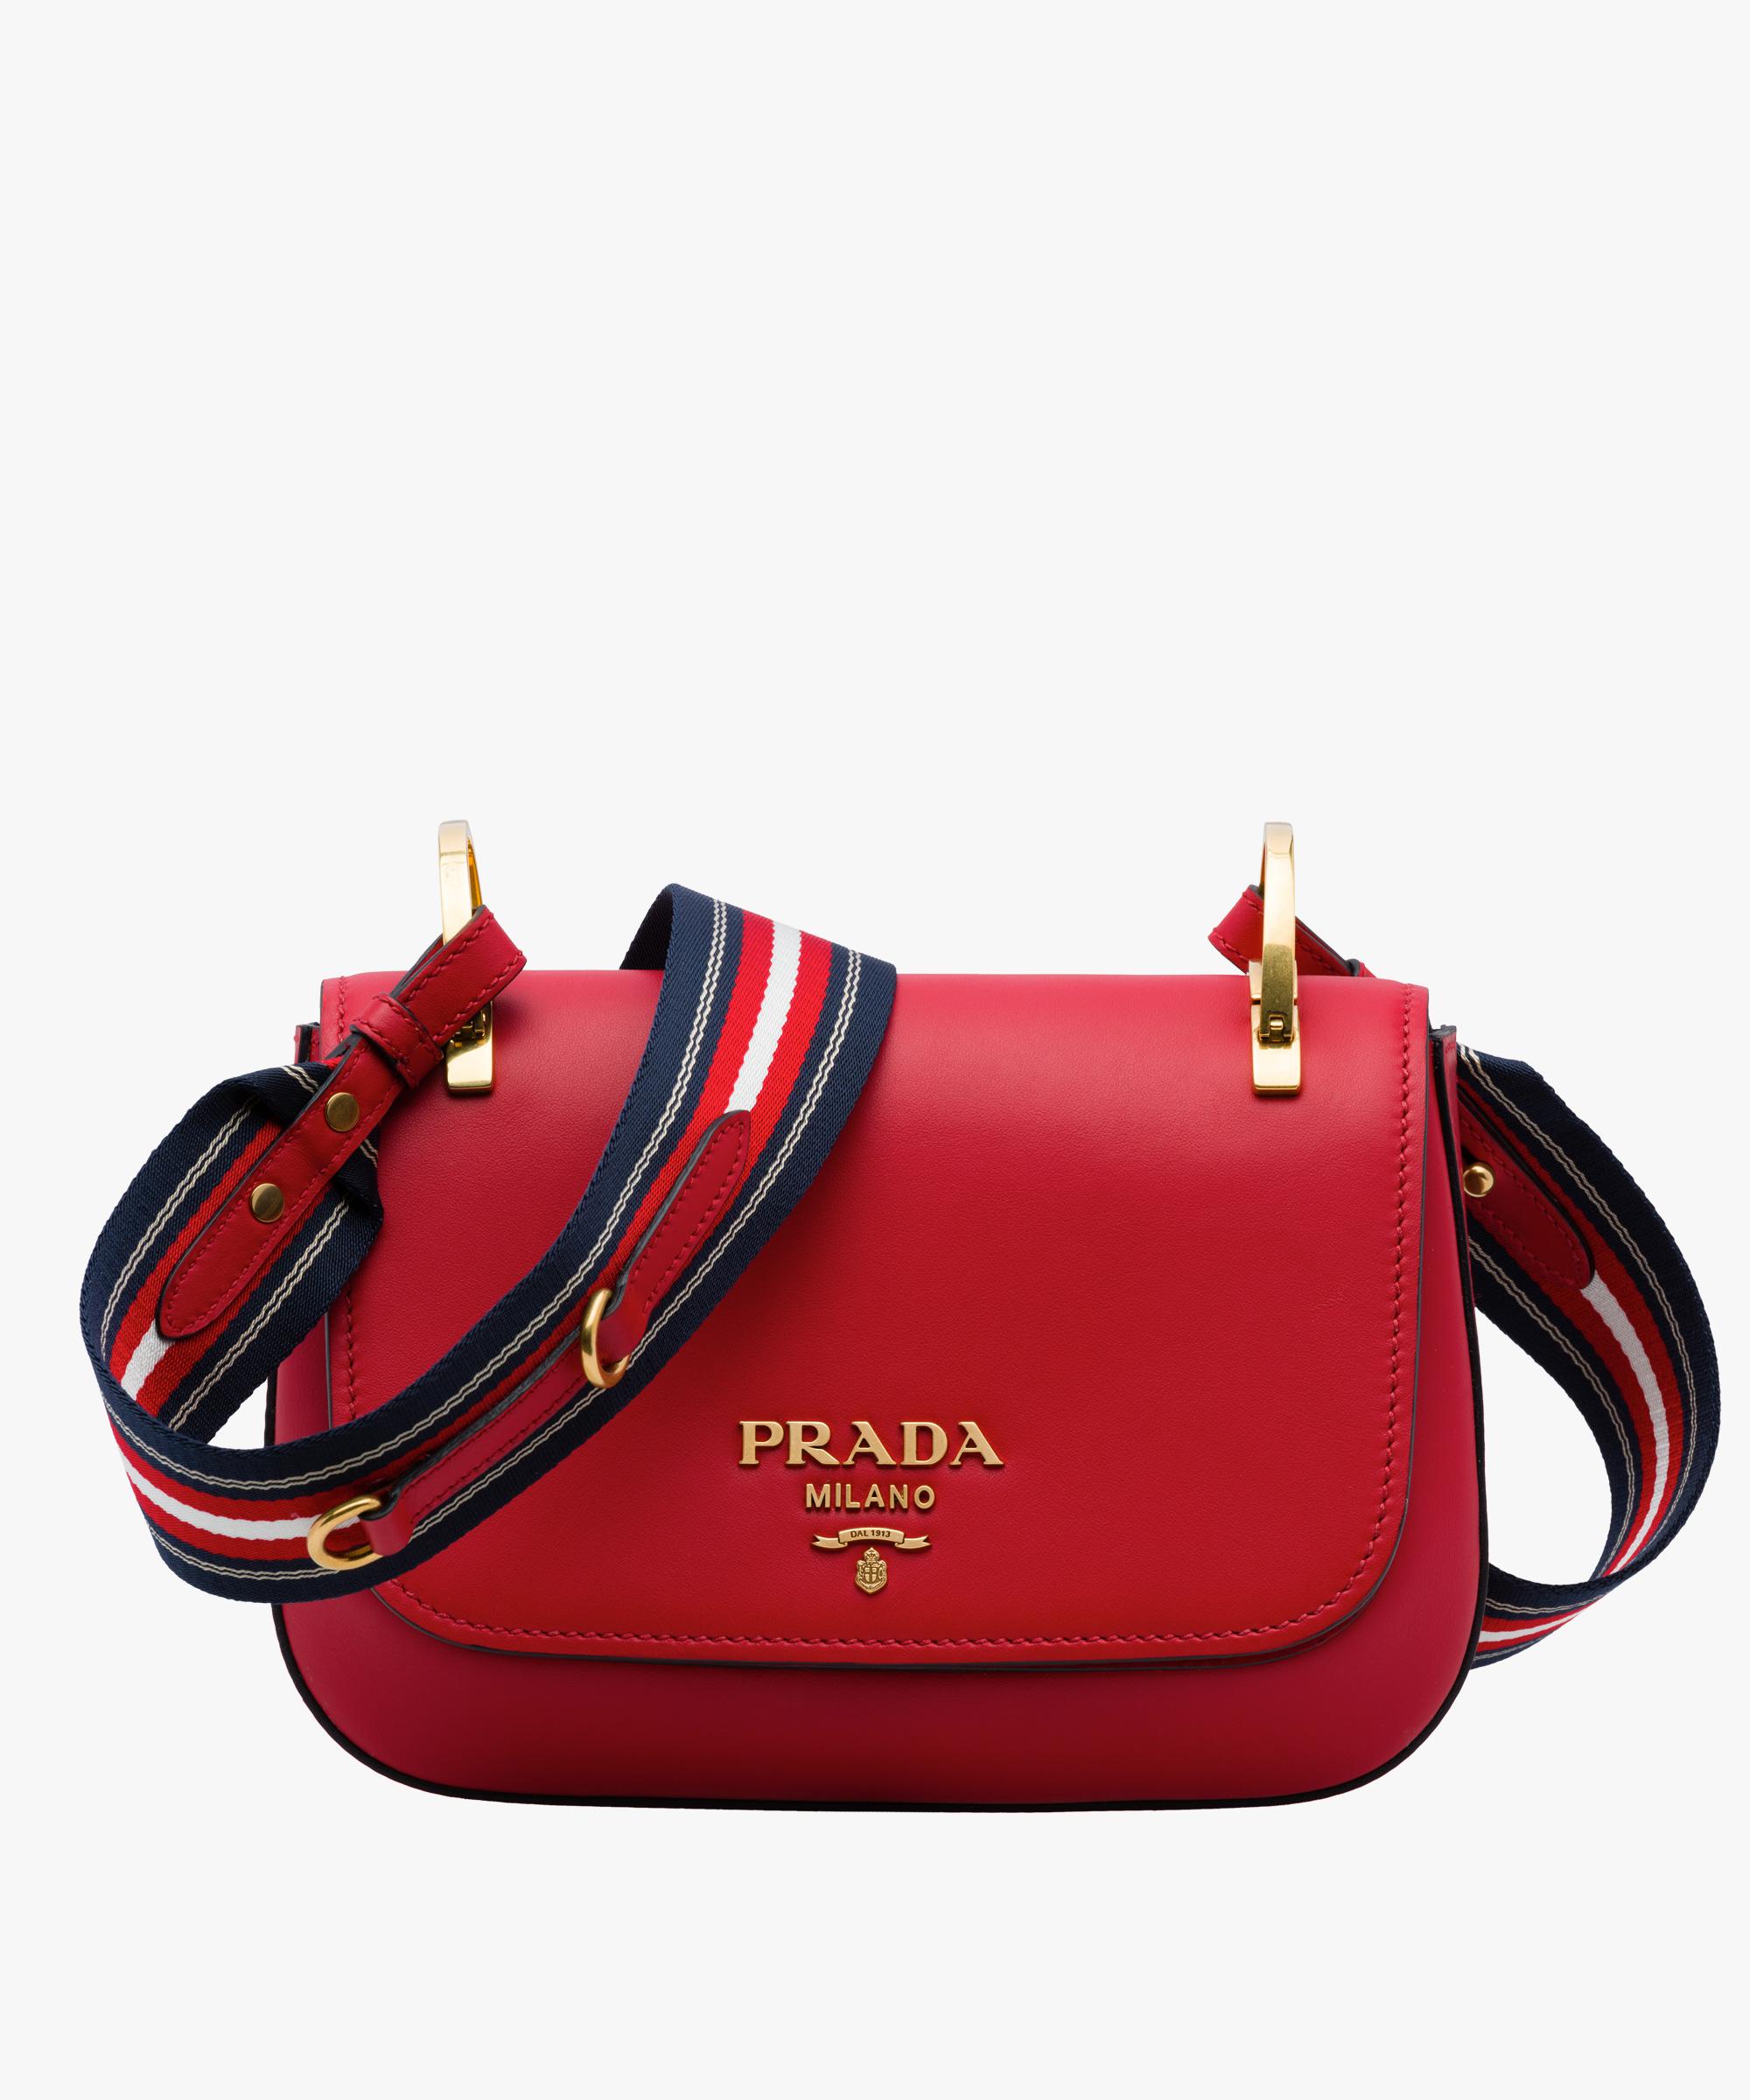 prada sling bag red